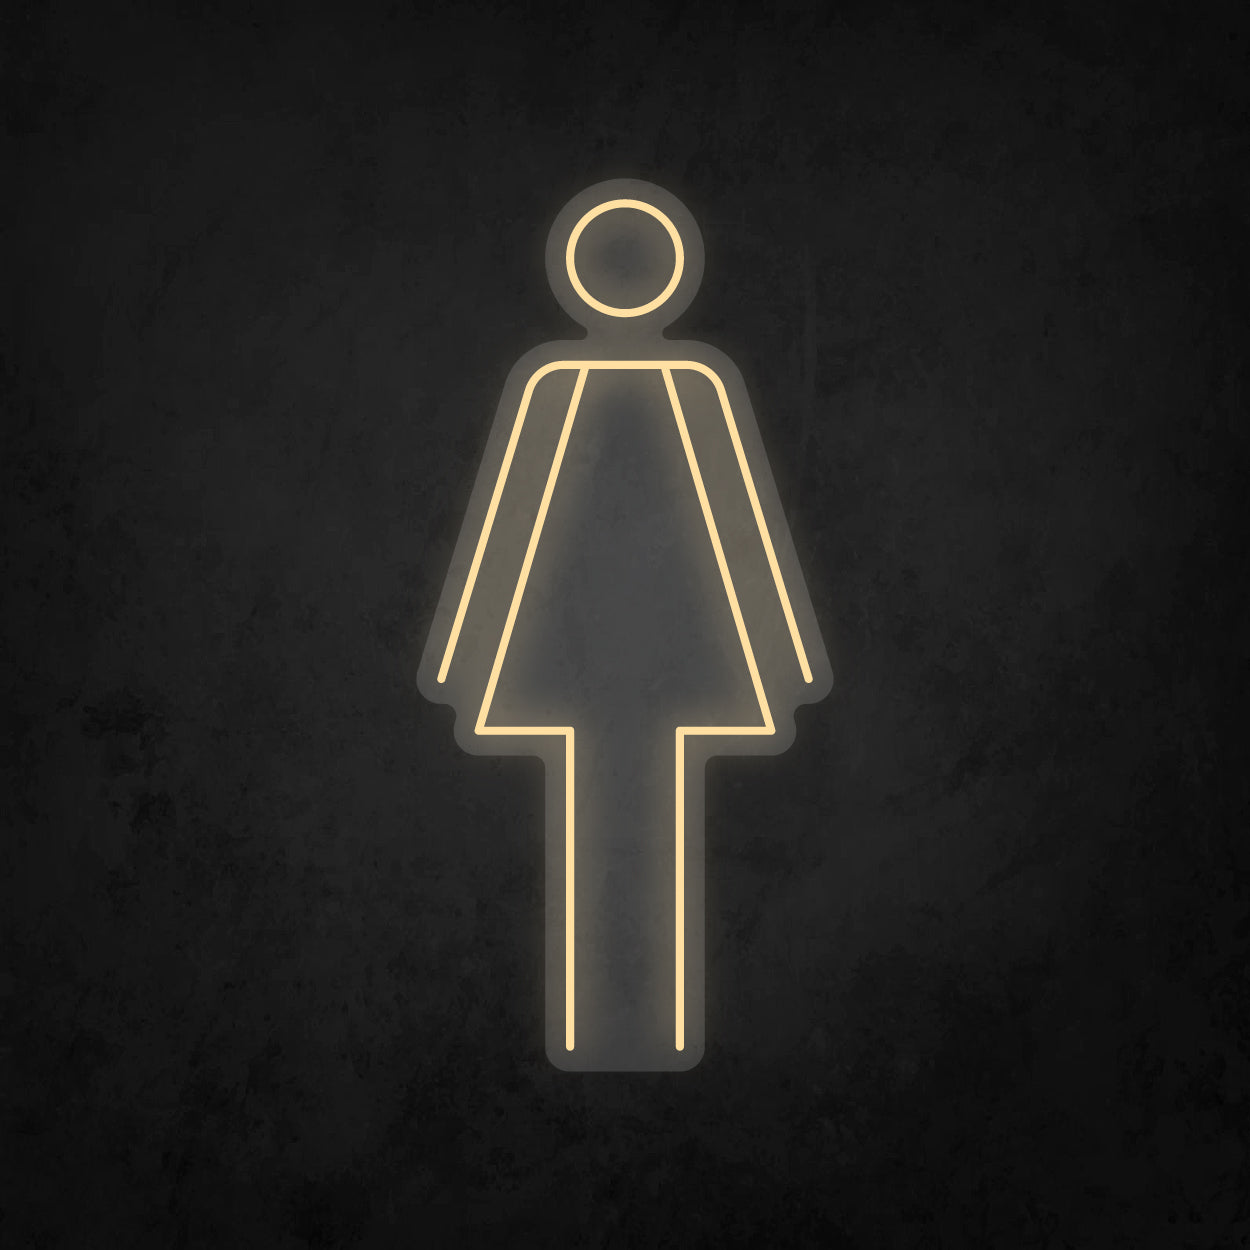 LED Neon Sign - Women's Restroom - Large